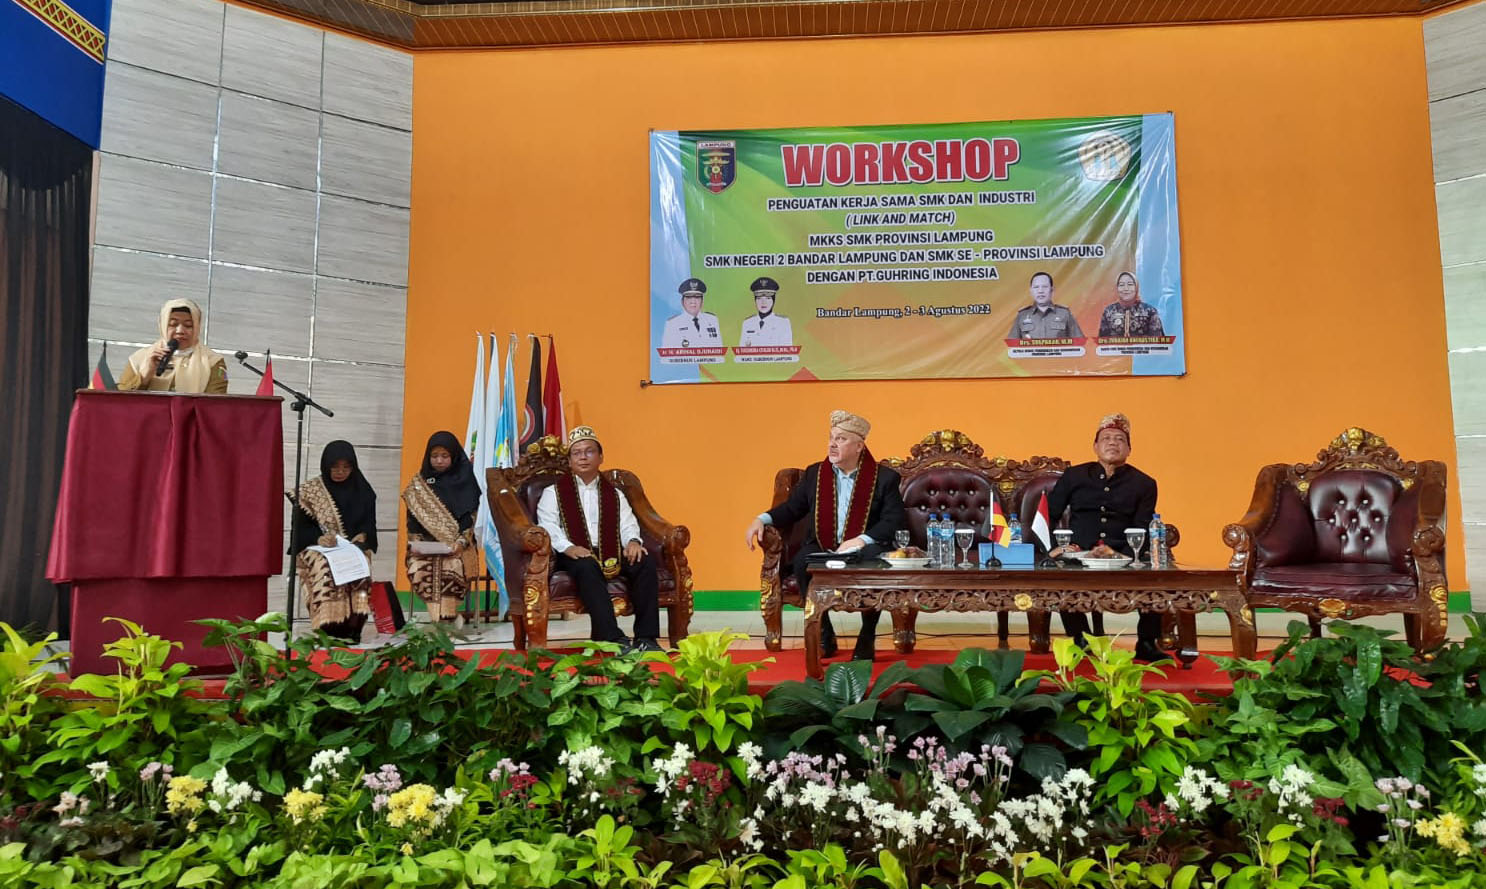 Gandeng PT Guhring Indonesia, MKKS SMK Gelar Workshop Penguatan Kerjasama Iduka 